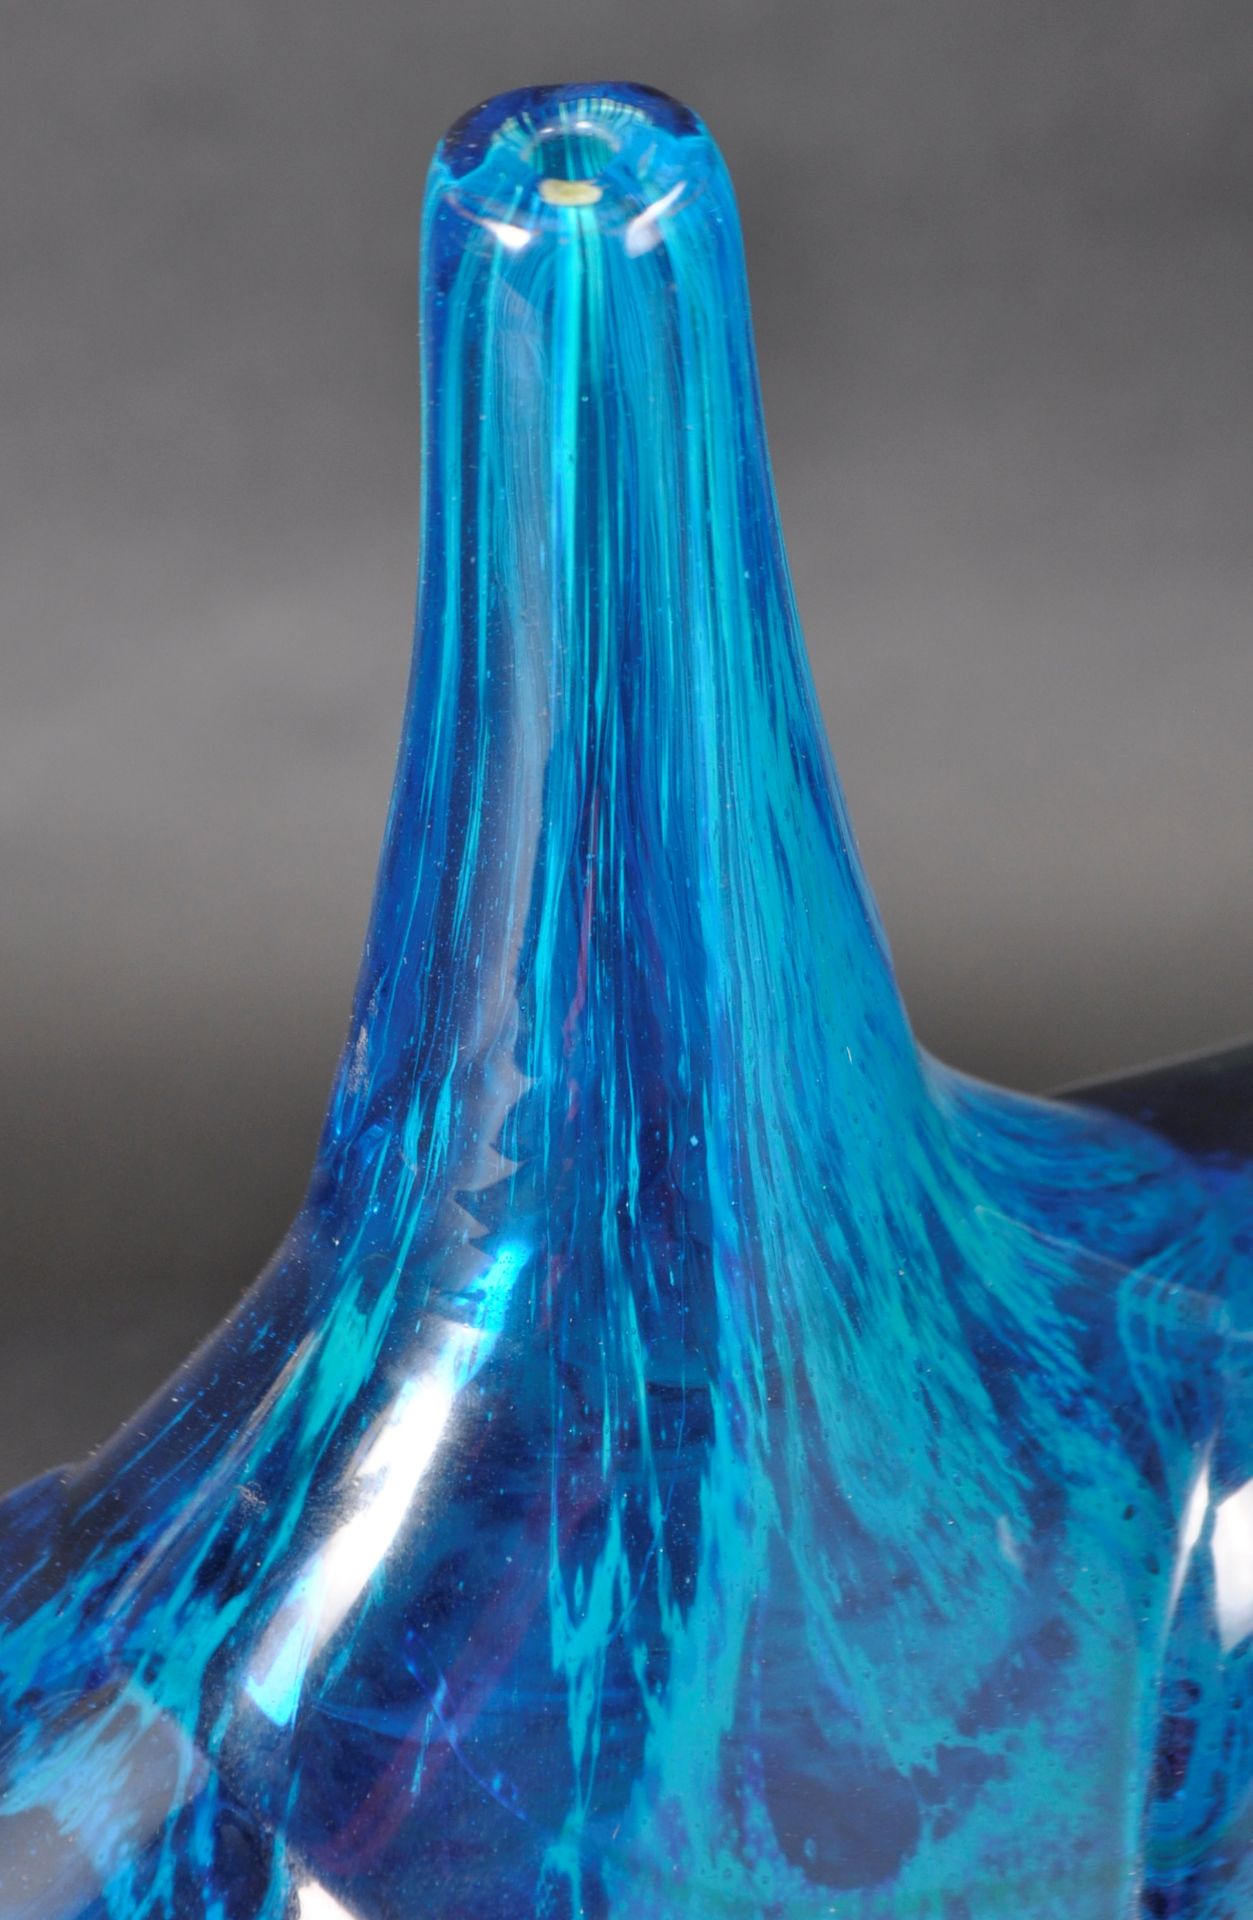 MICHAEL HARRIS FOR MDINA - AEX EAD STUDIO ART GLASS VASE - Image 3 of 7